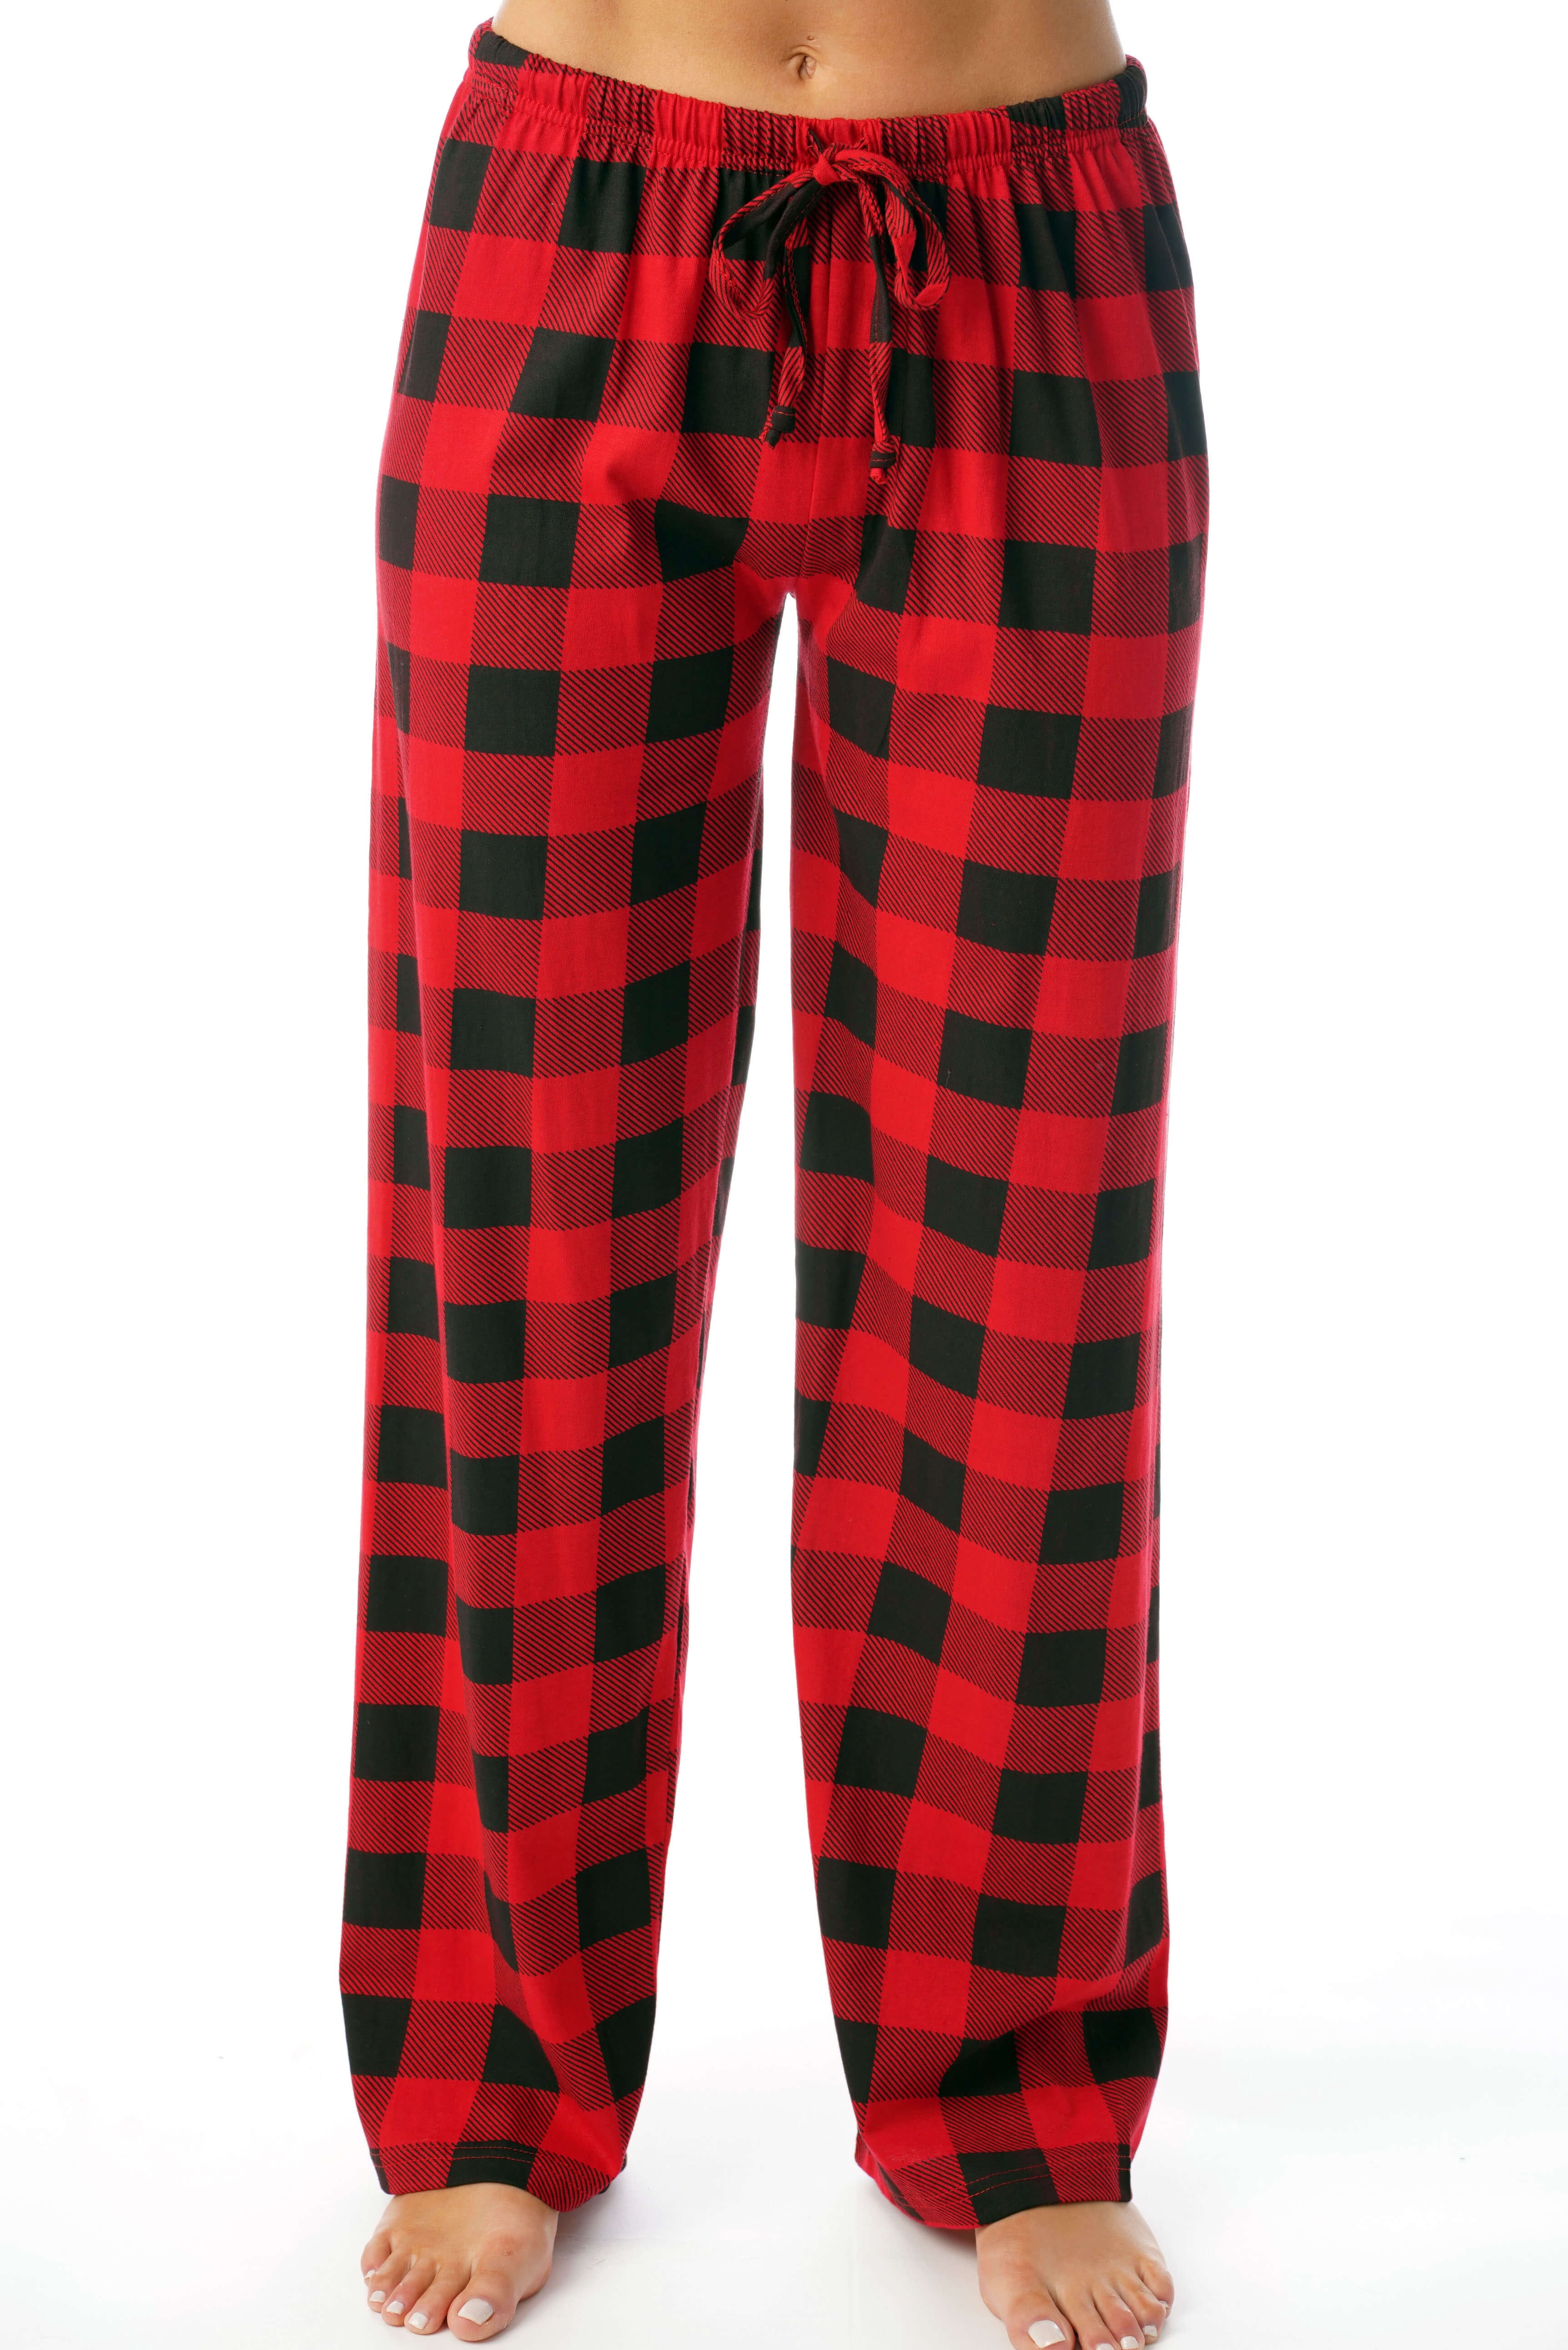 Just Love Women Buffalo Plaid Pajama Pants Sleepwear. (Red Black Buffalo  Plaid, Small)